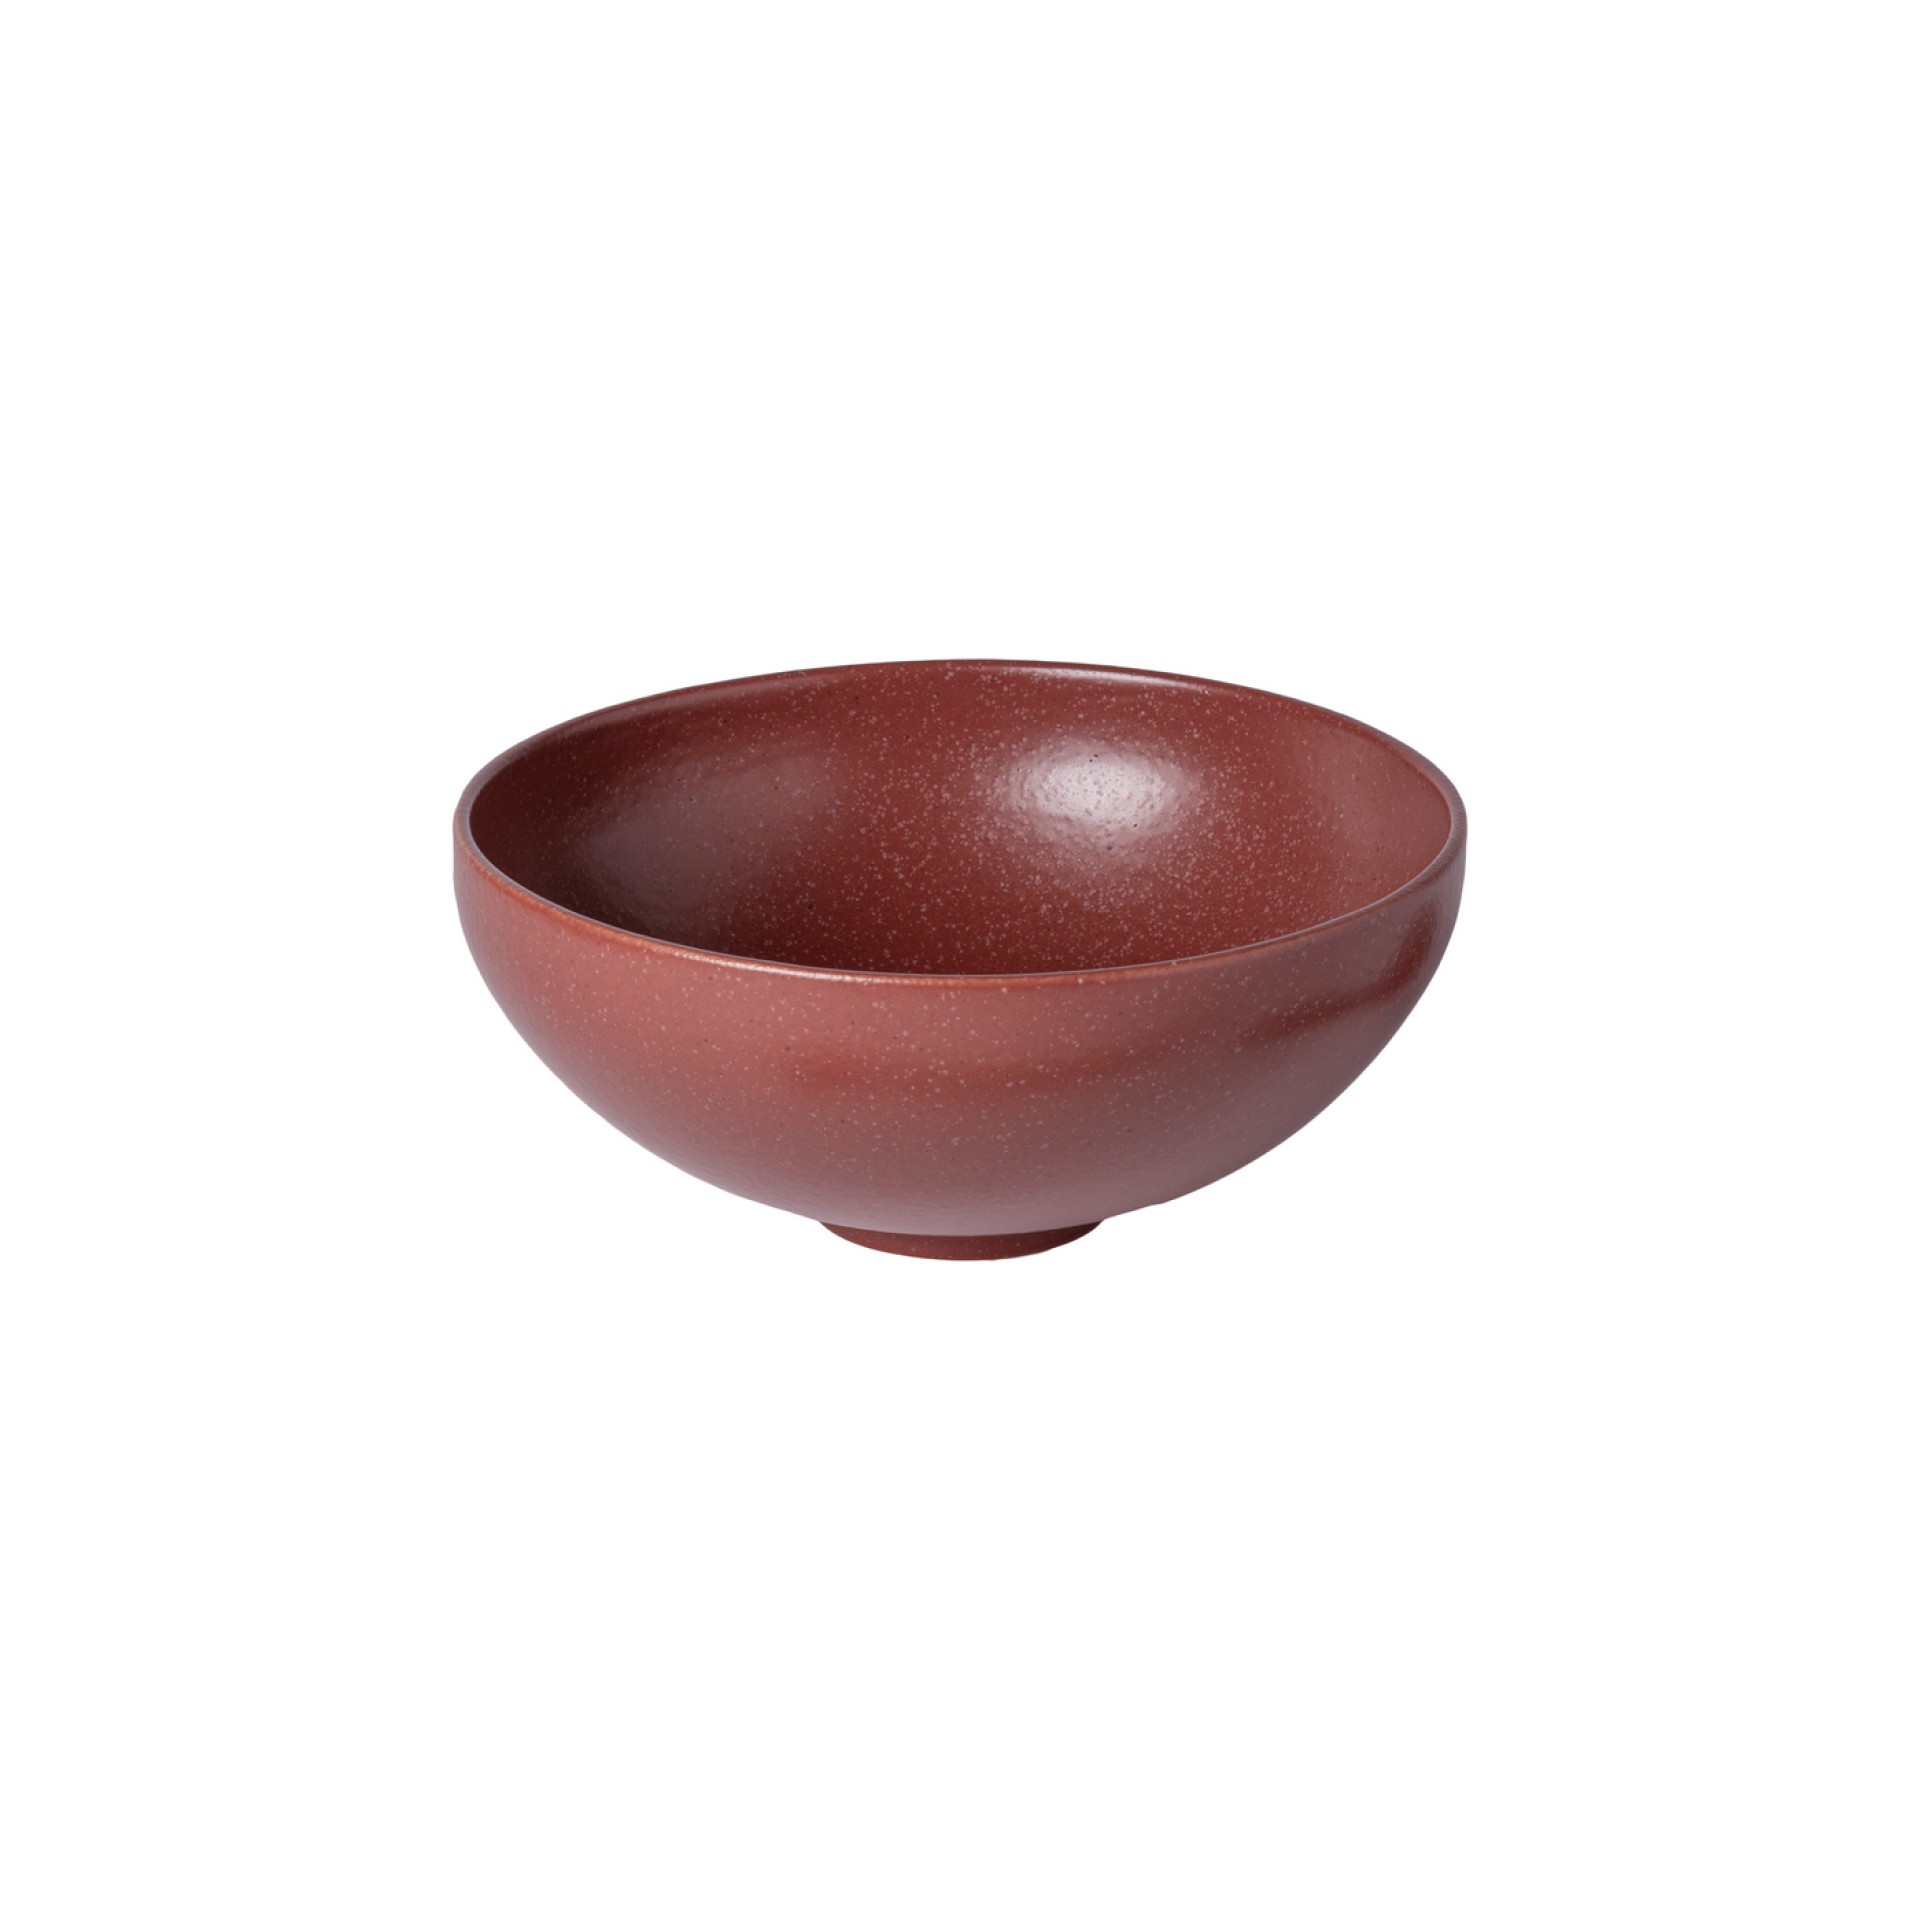 Ramen Bowl Pacifica by Casafina